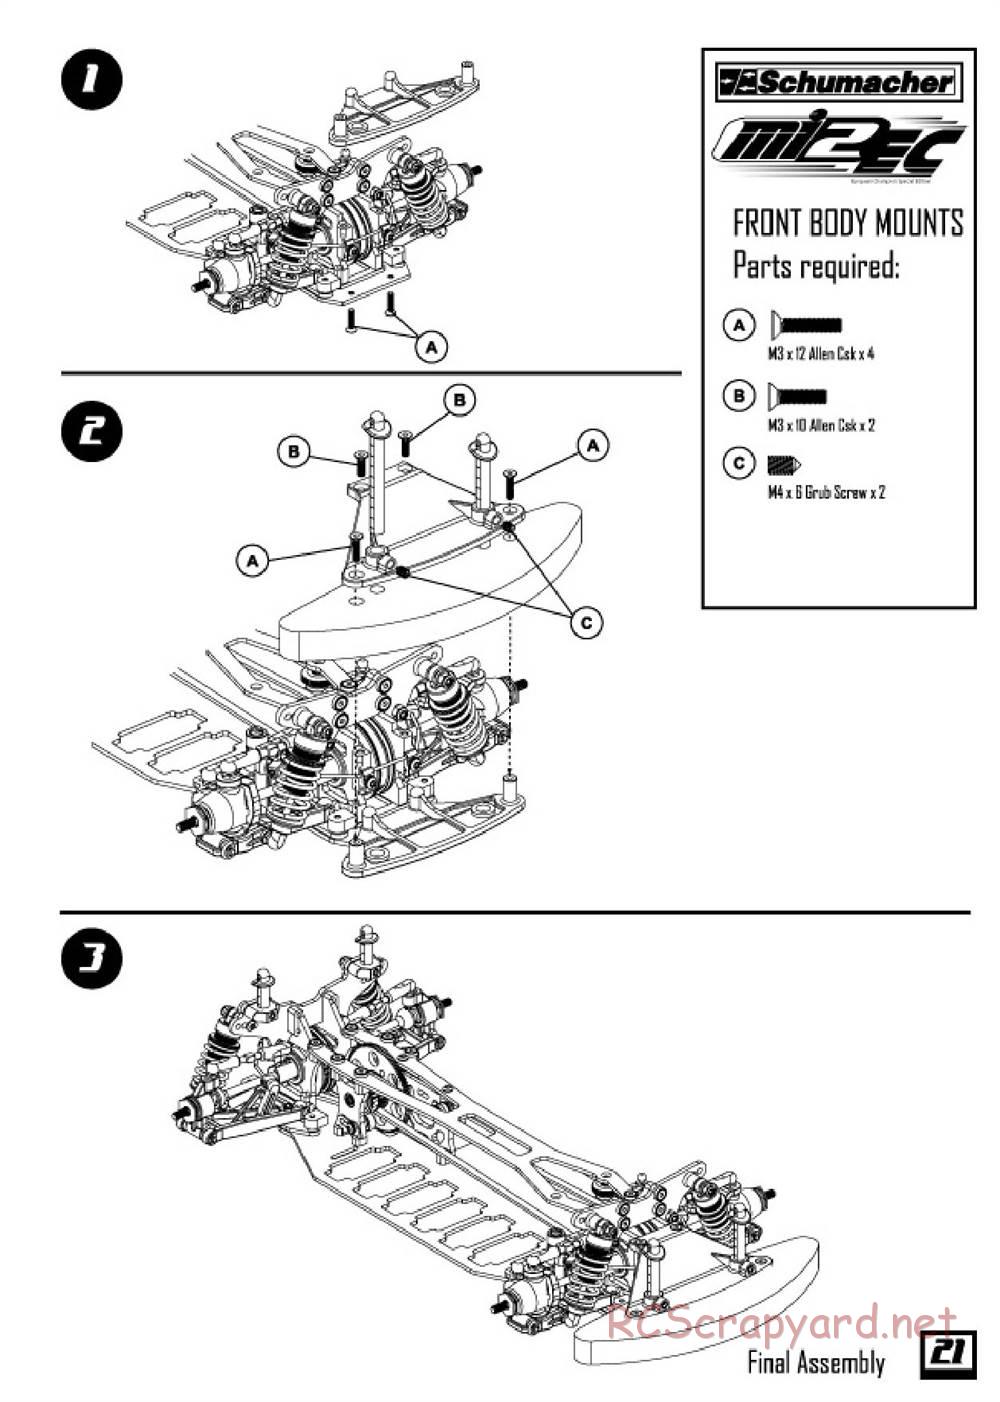 Schumacher - Mi2 EC - Manual - Page 23